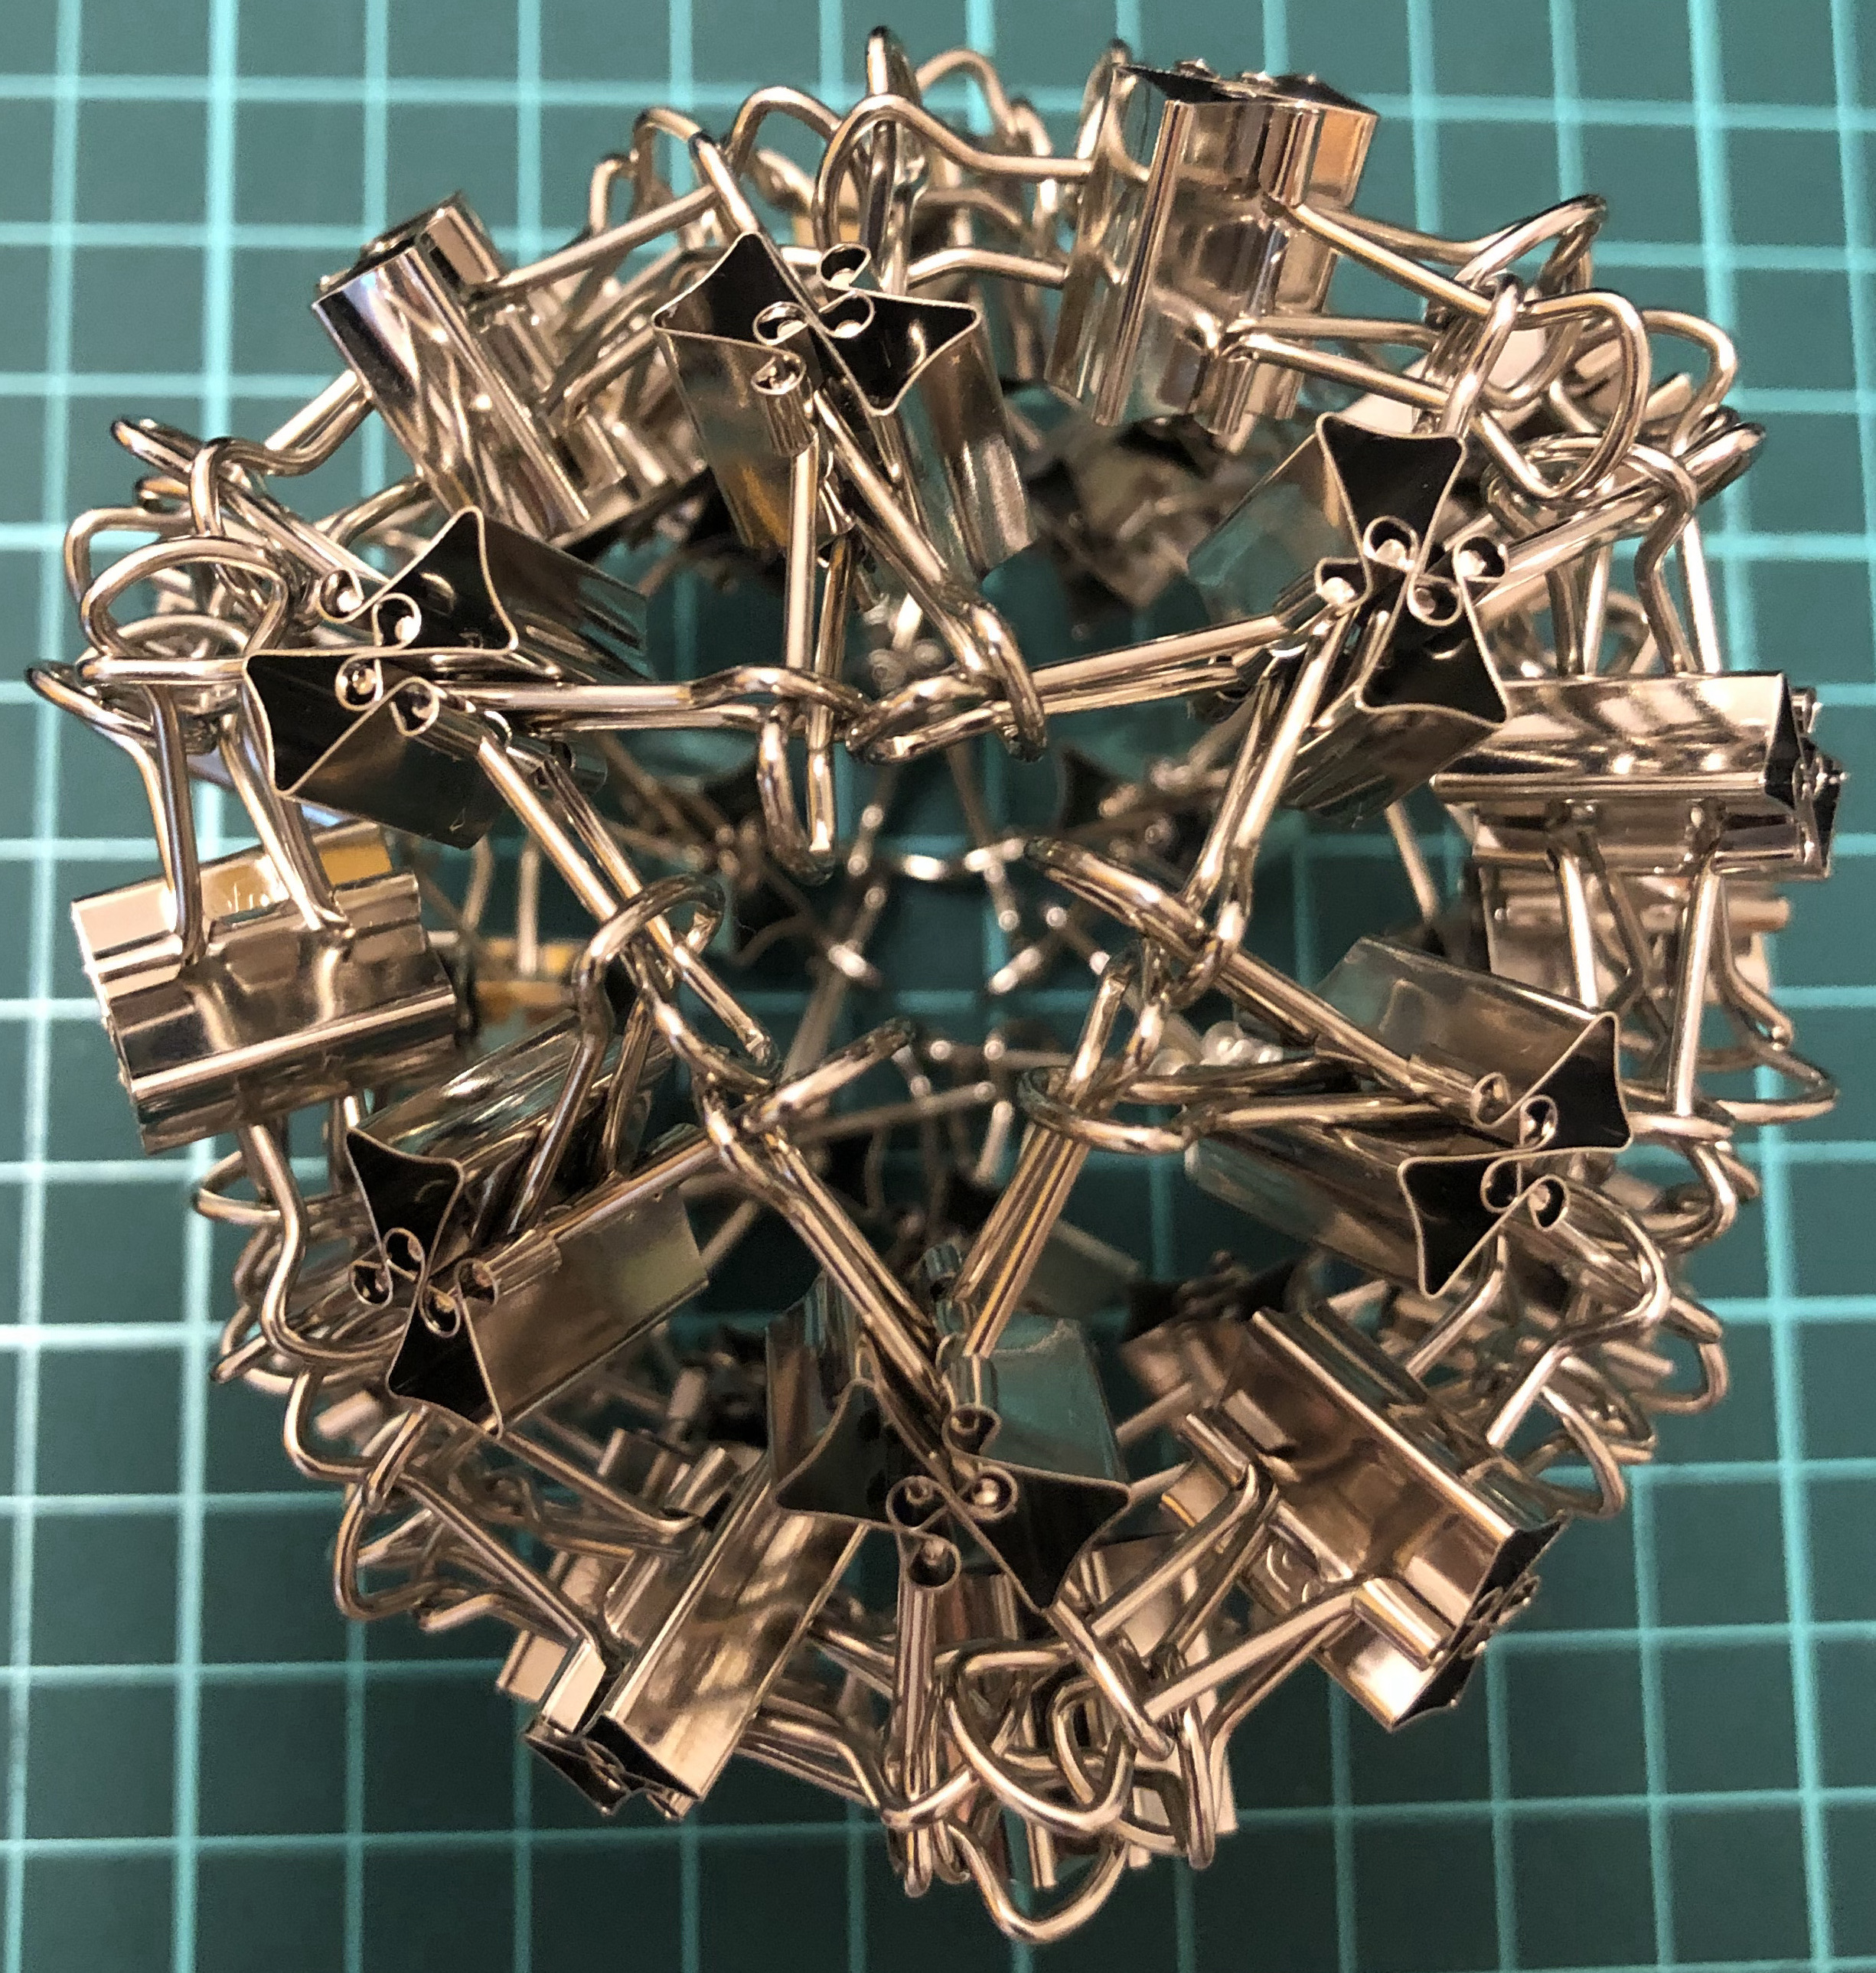 72 clips forming 36 I-edges forming tetrakis hexahedron